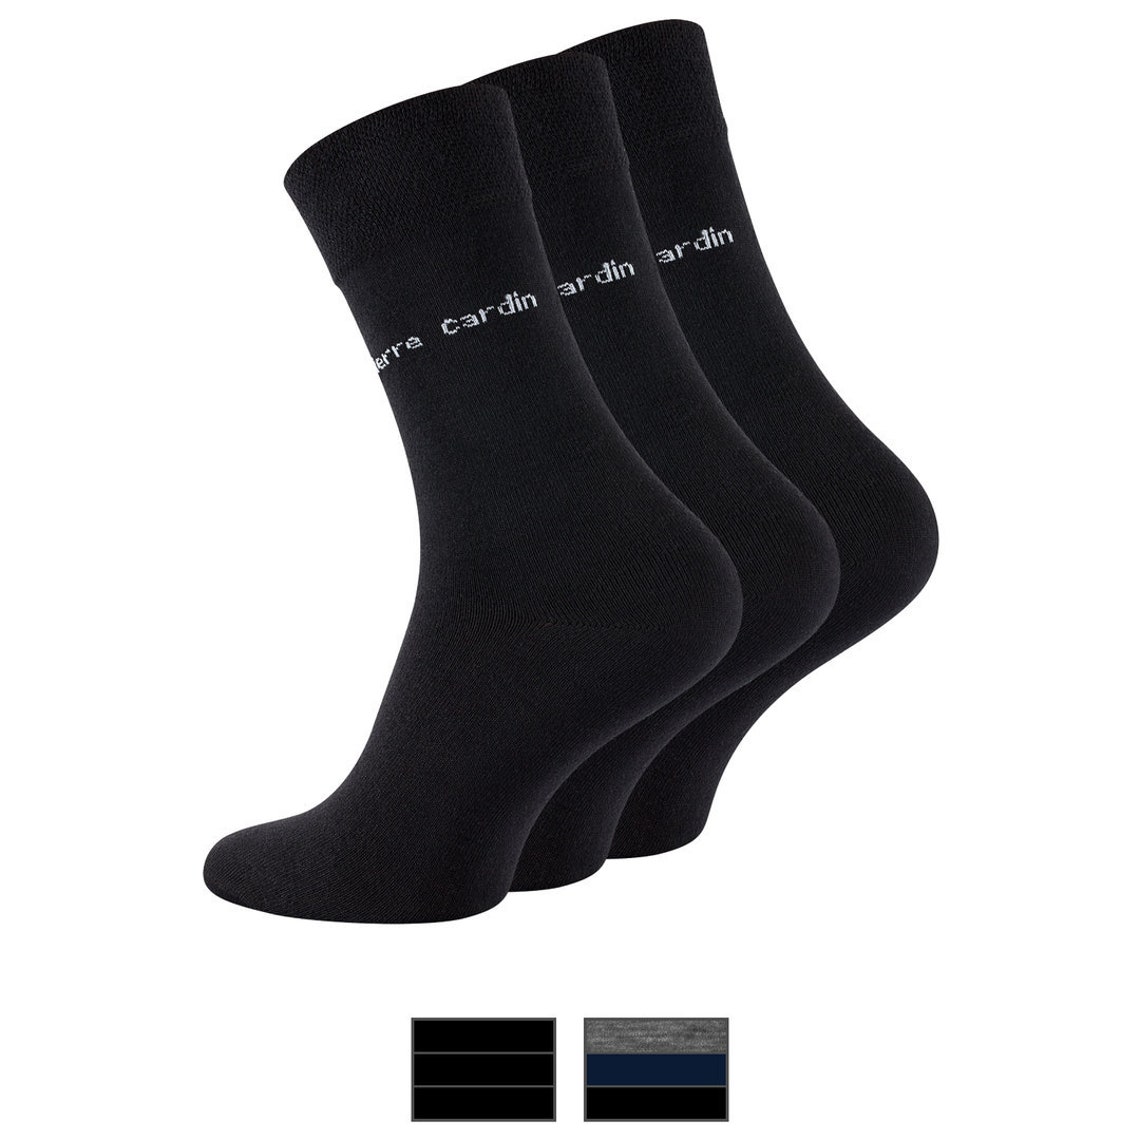 Pierre Cardin Men's Business Socks. Original Brand | Etsy